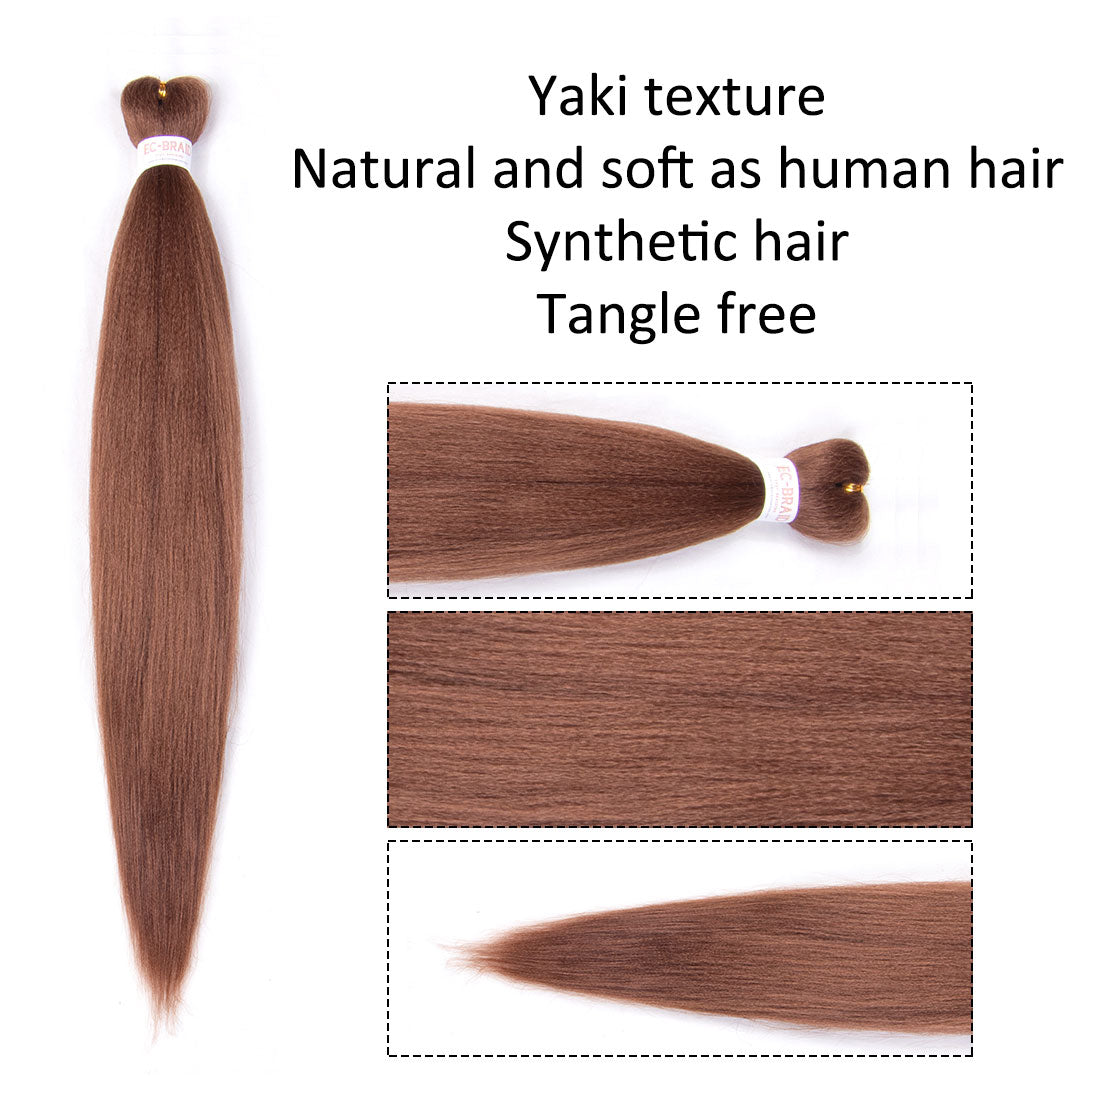 EZ Braid #30 Pre Stretched Braiding Hair 26" Yaki Synthetic Hair